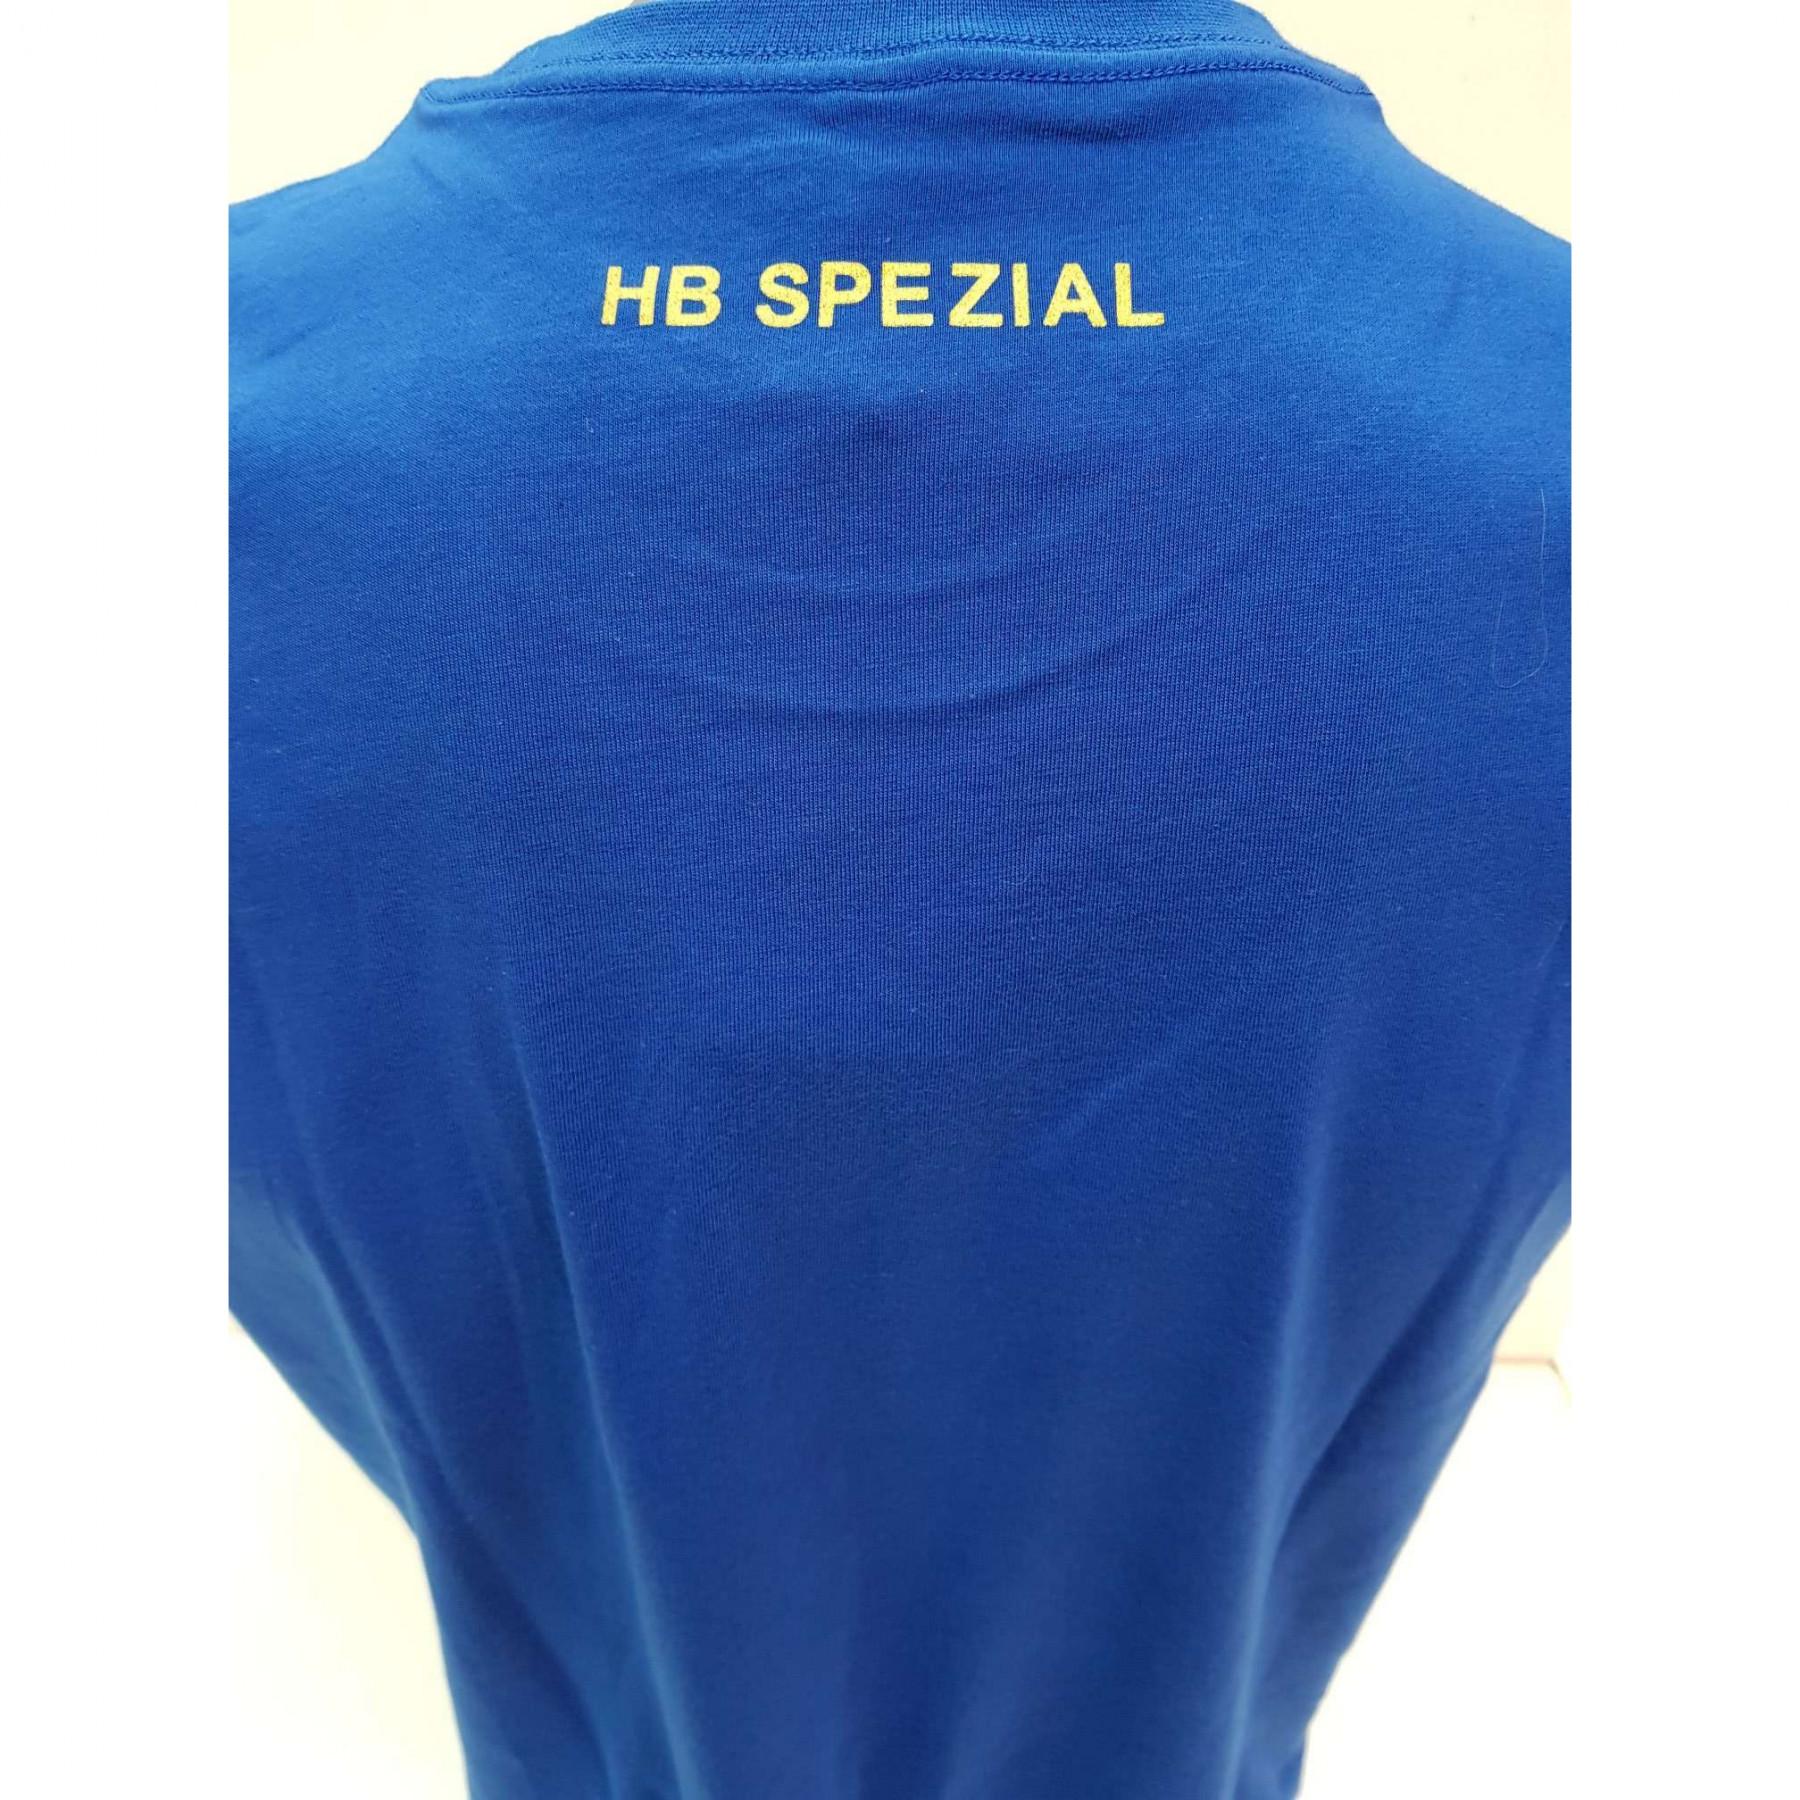 Koszulka Adidas HB Spezial